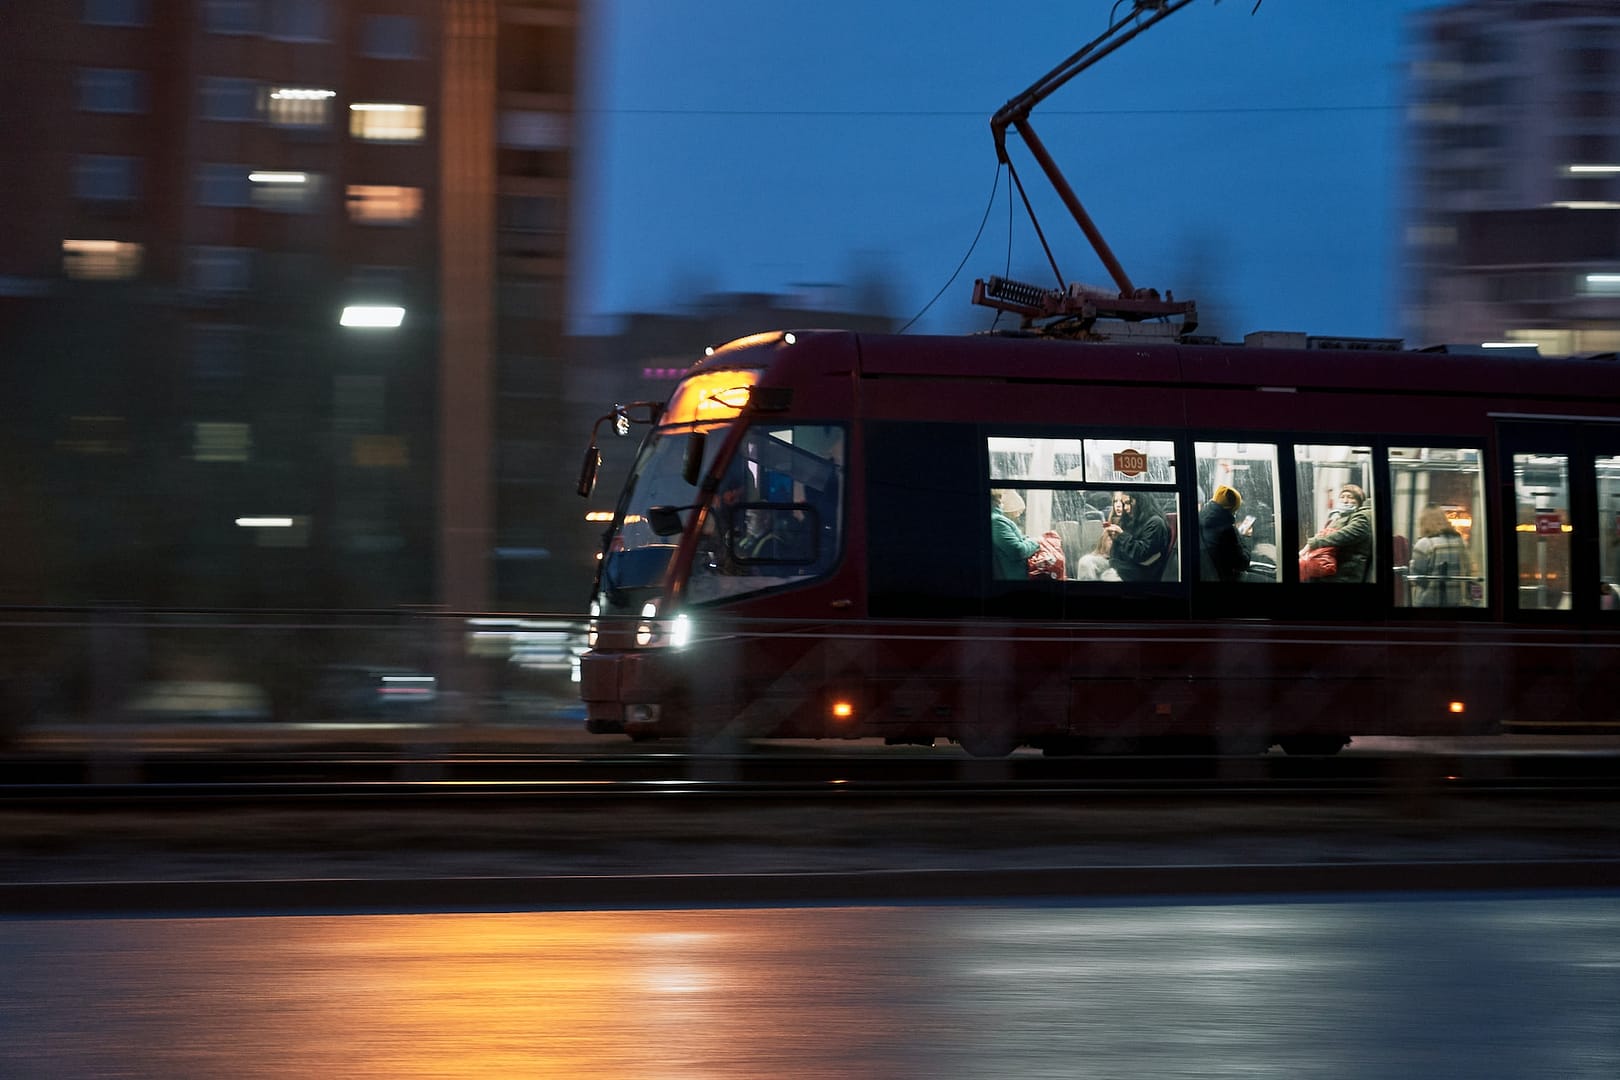 A tram at night